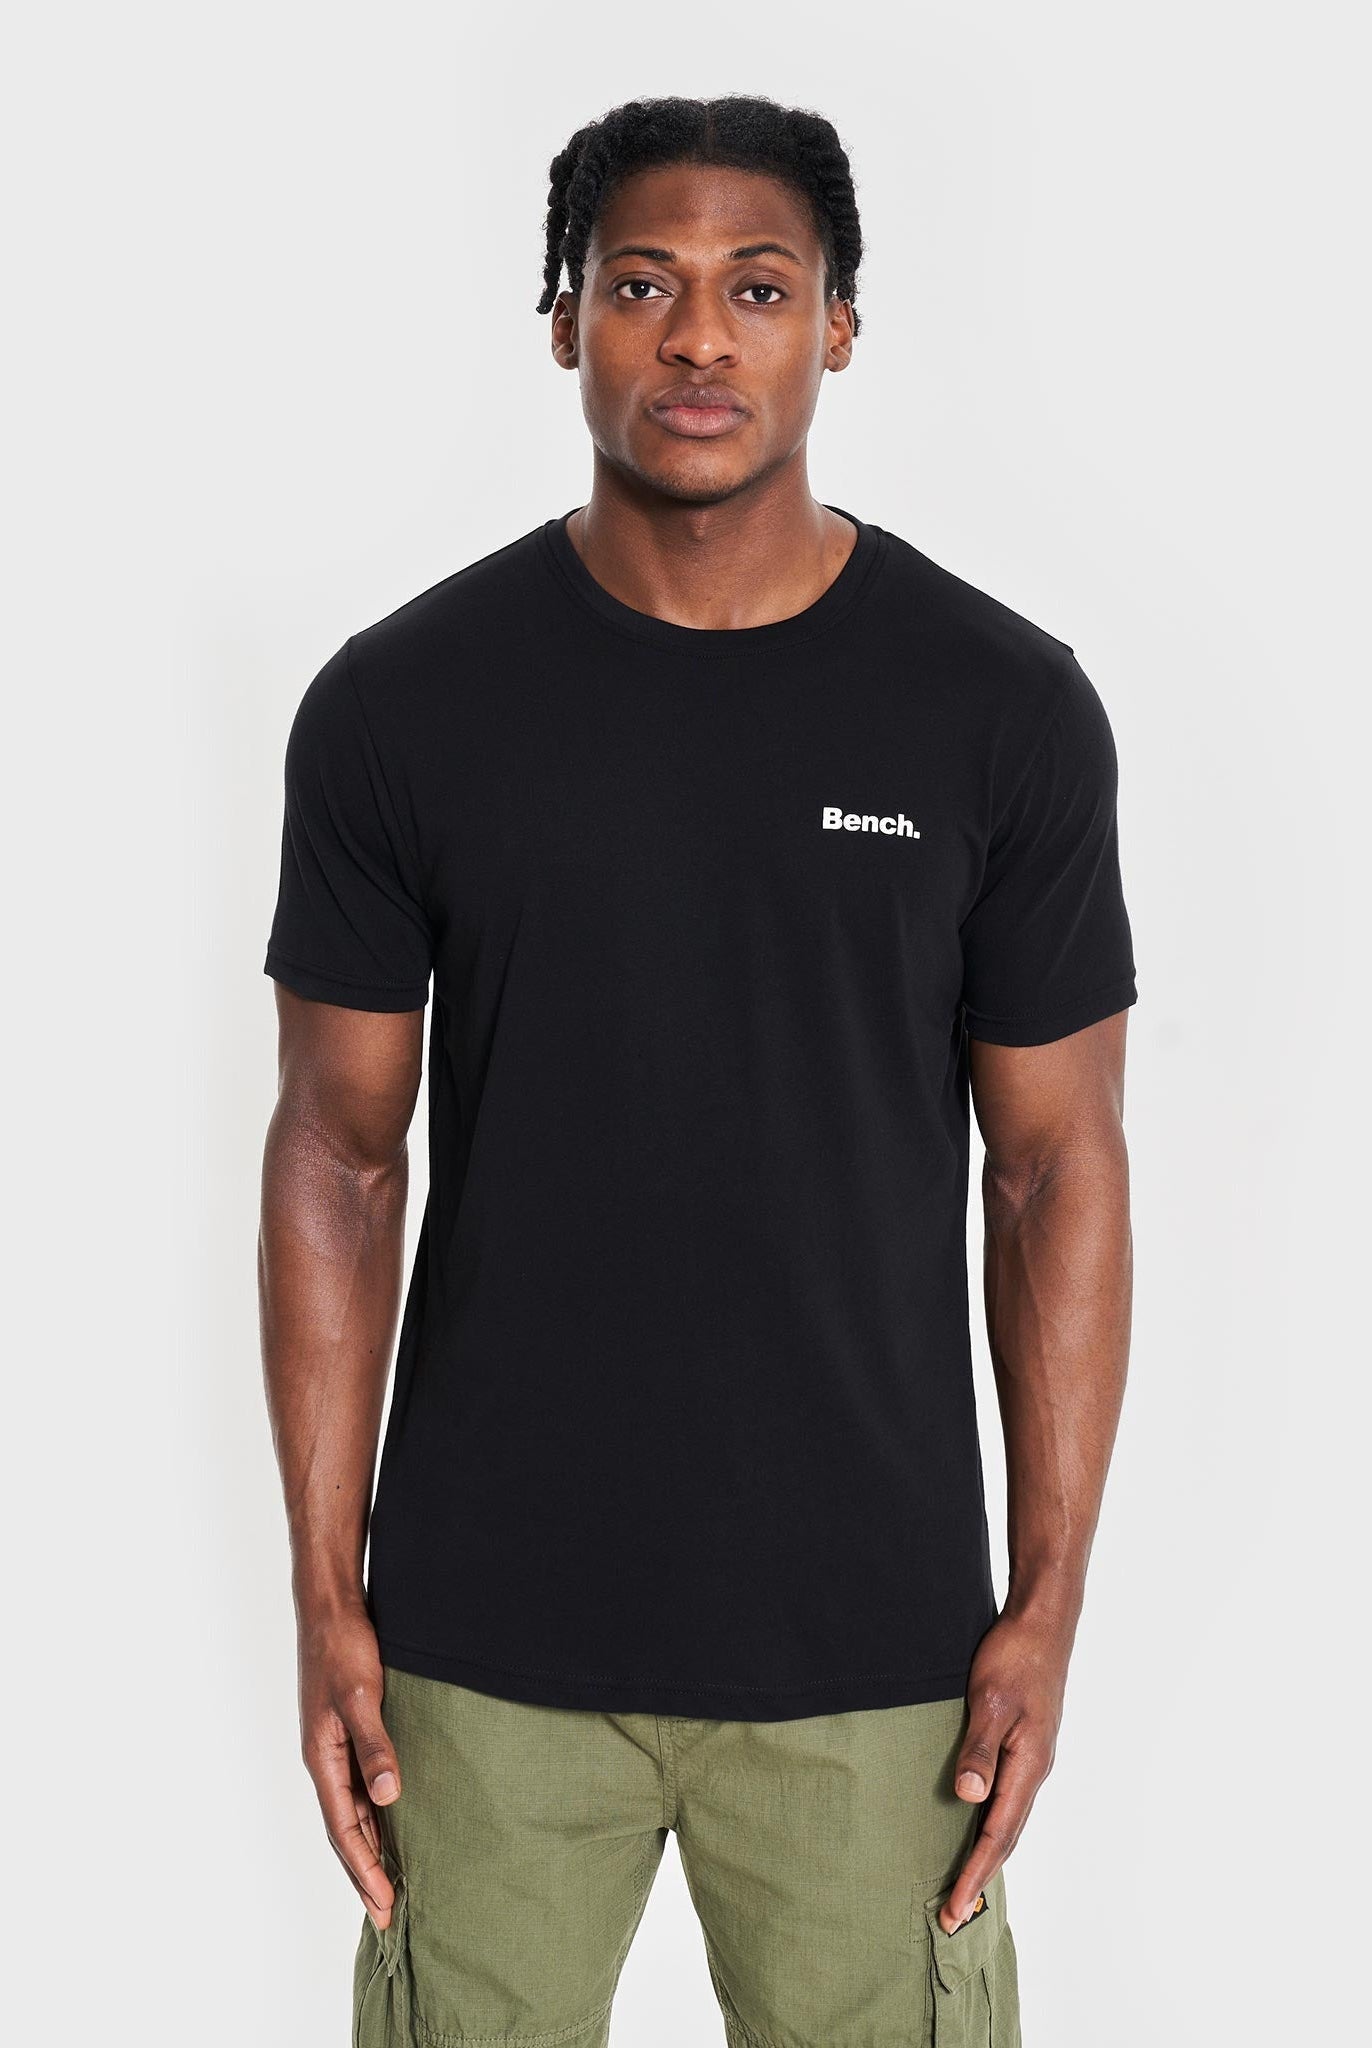 Mens 'ENVOY' 5 Pack T-Shirts - ASSORTED - Shop at www.Bench.co.uk #LoveMyHood